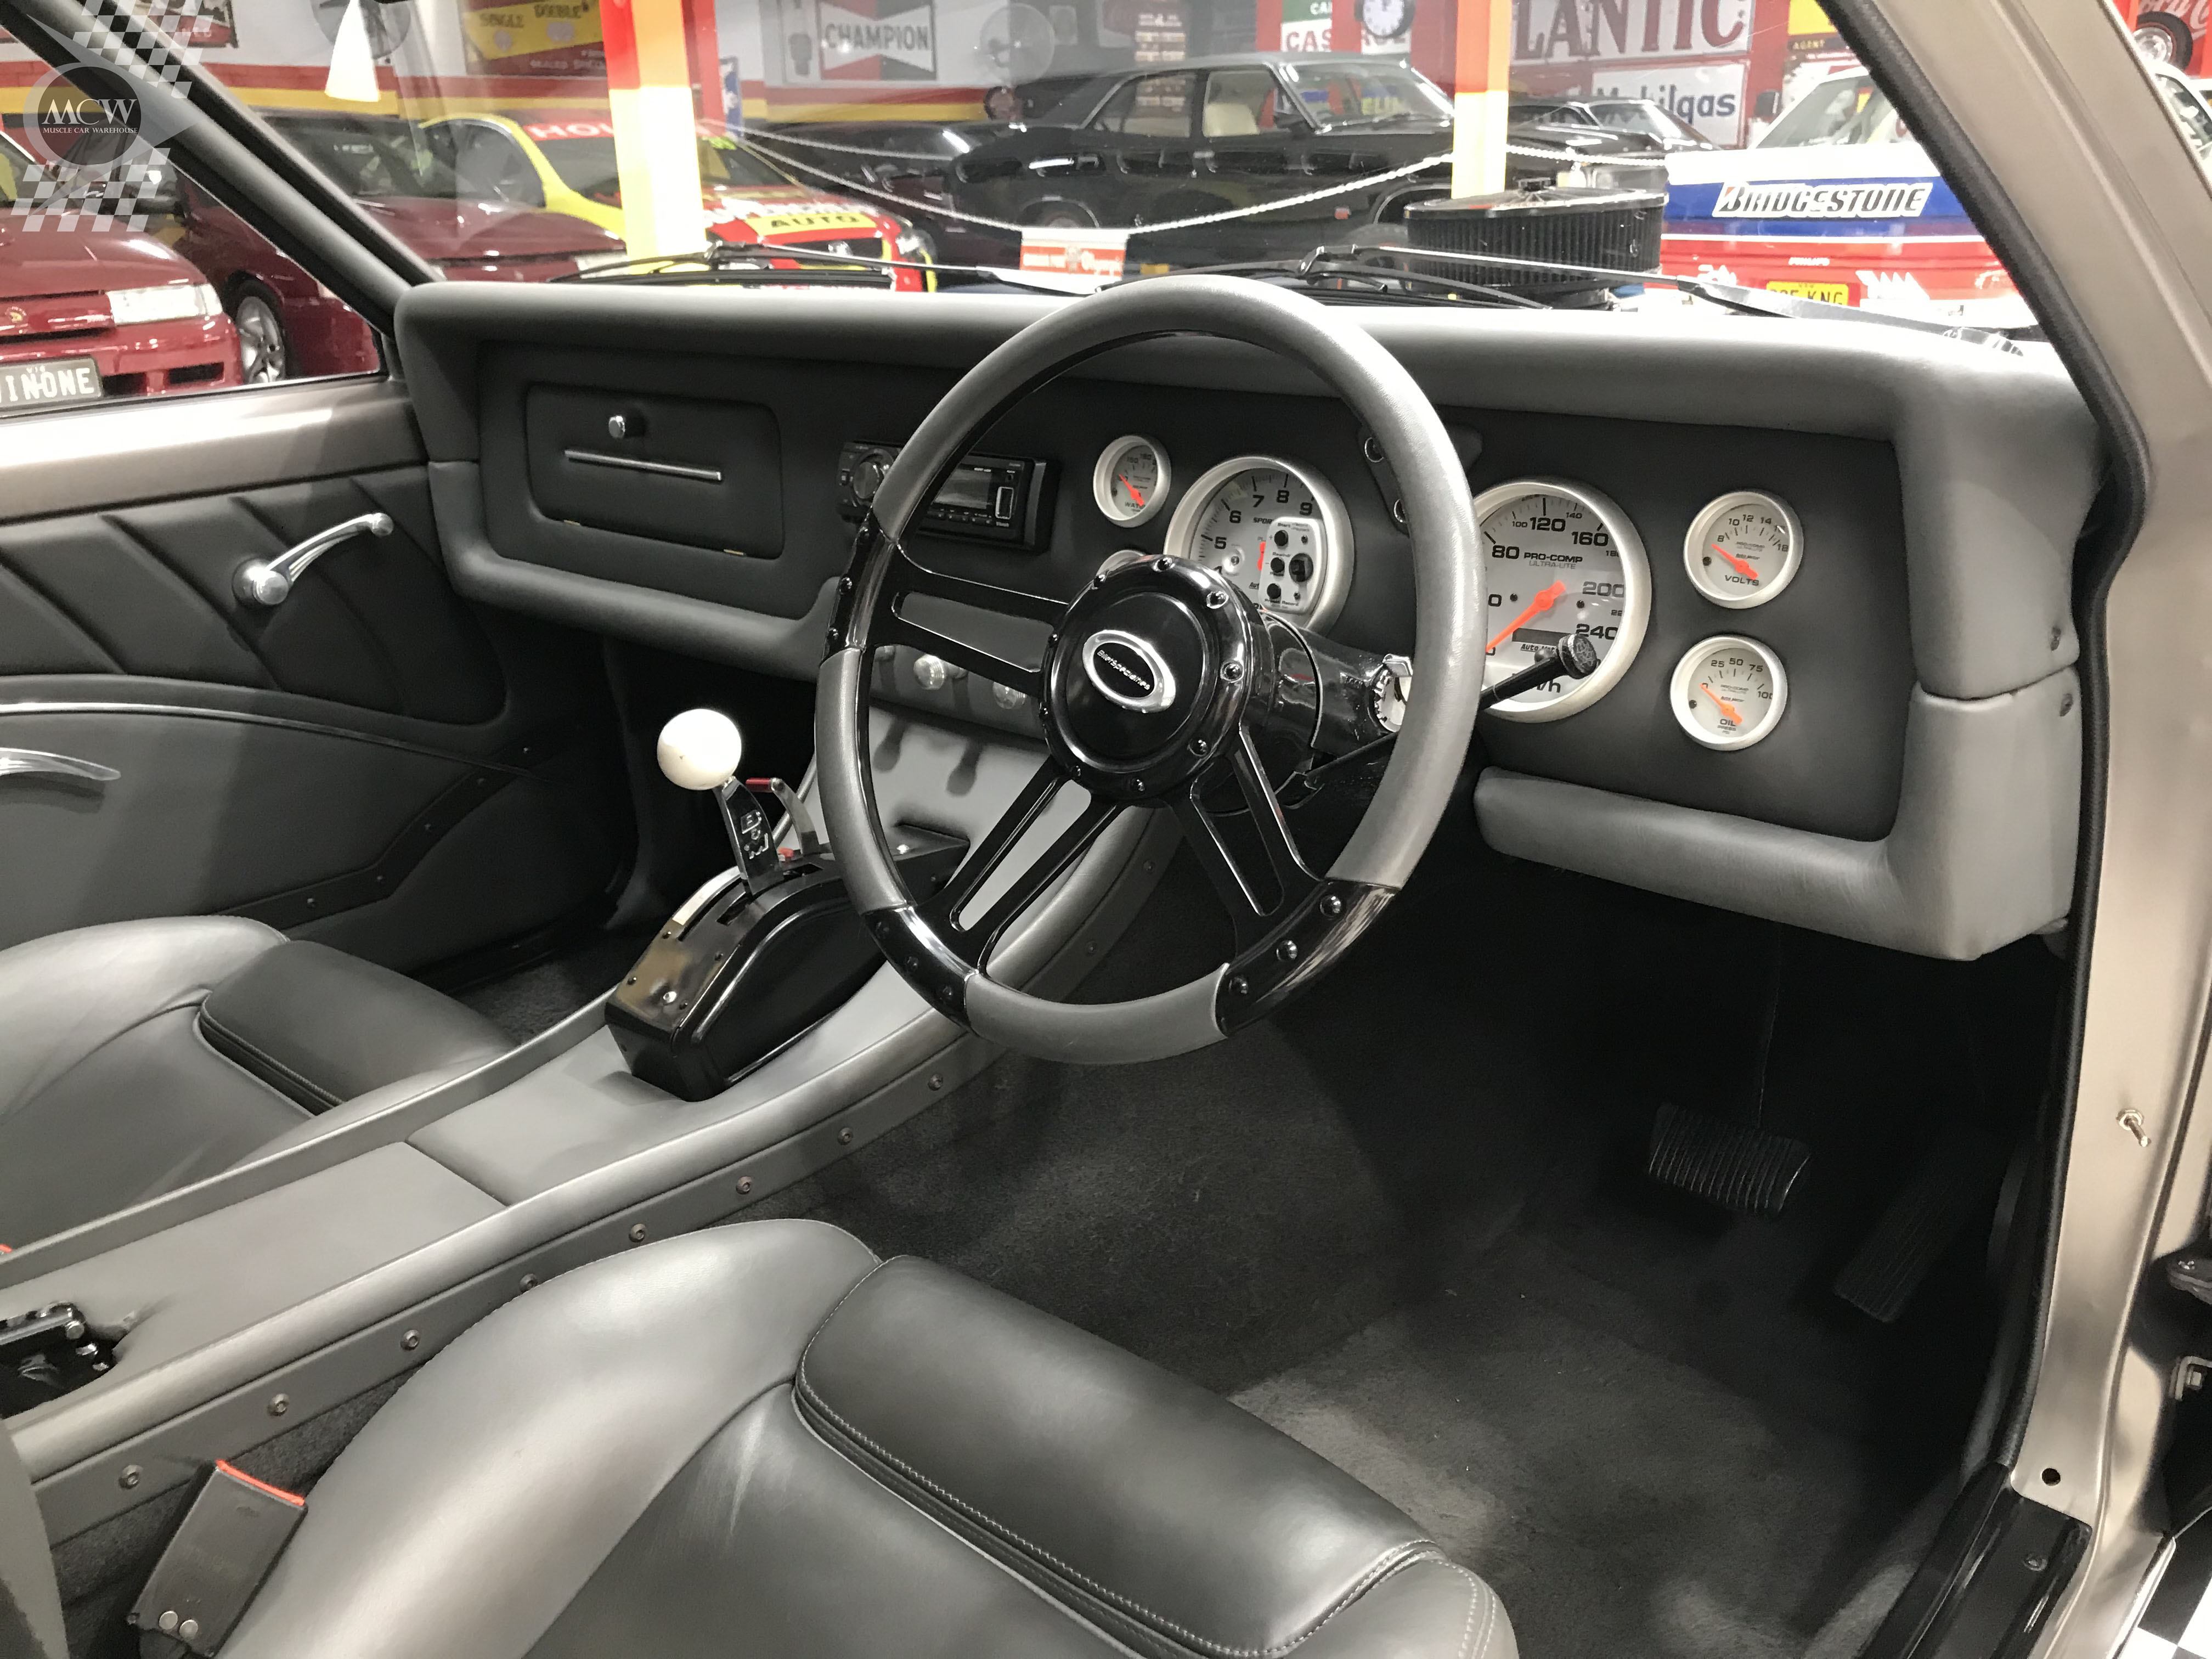 1976 Holden Torana Interior | Muscle Car Warehouse